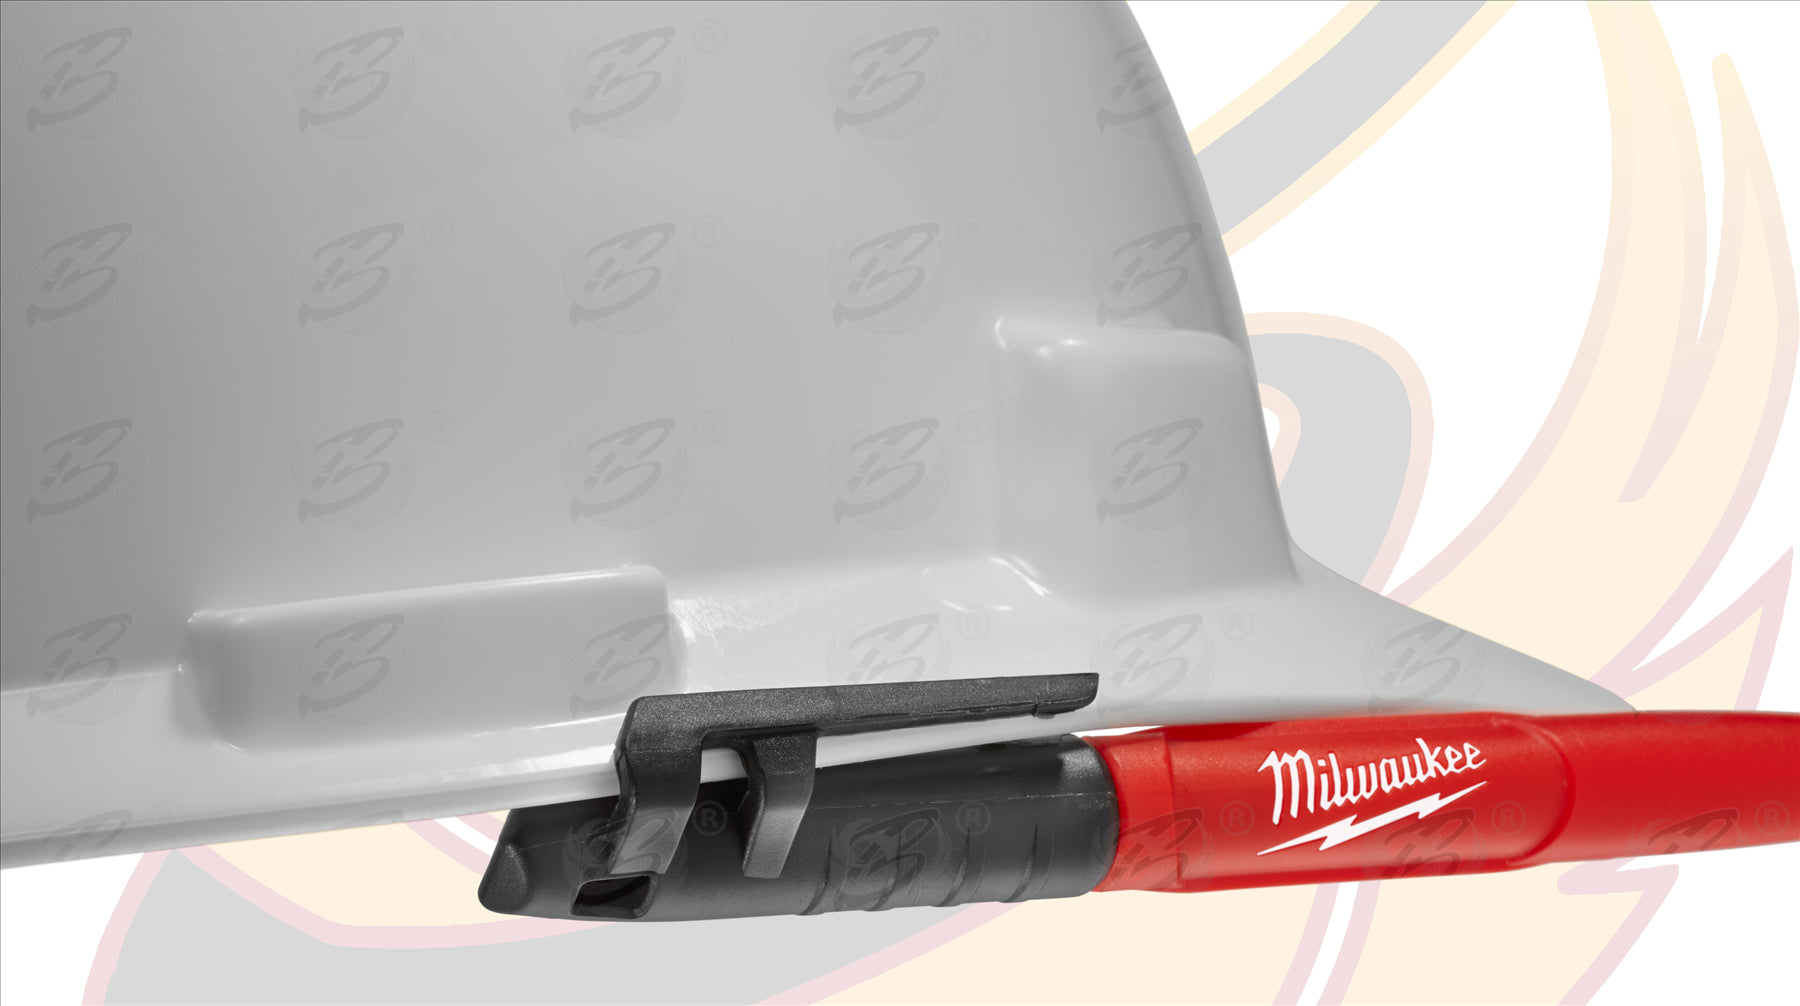 MILWAUKEE INKZALL 1mm ALL SURFACE MARKER PEN ( x3 )